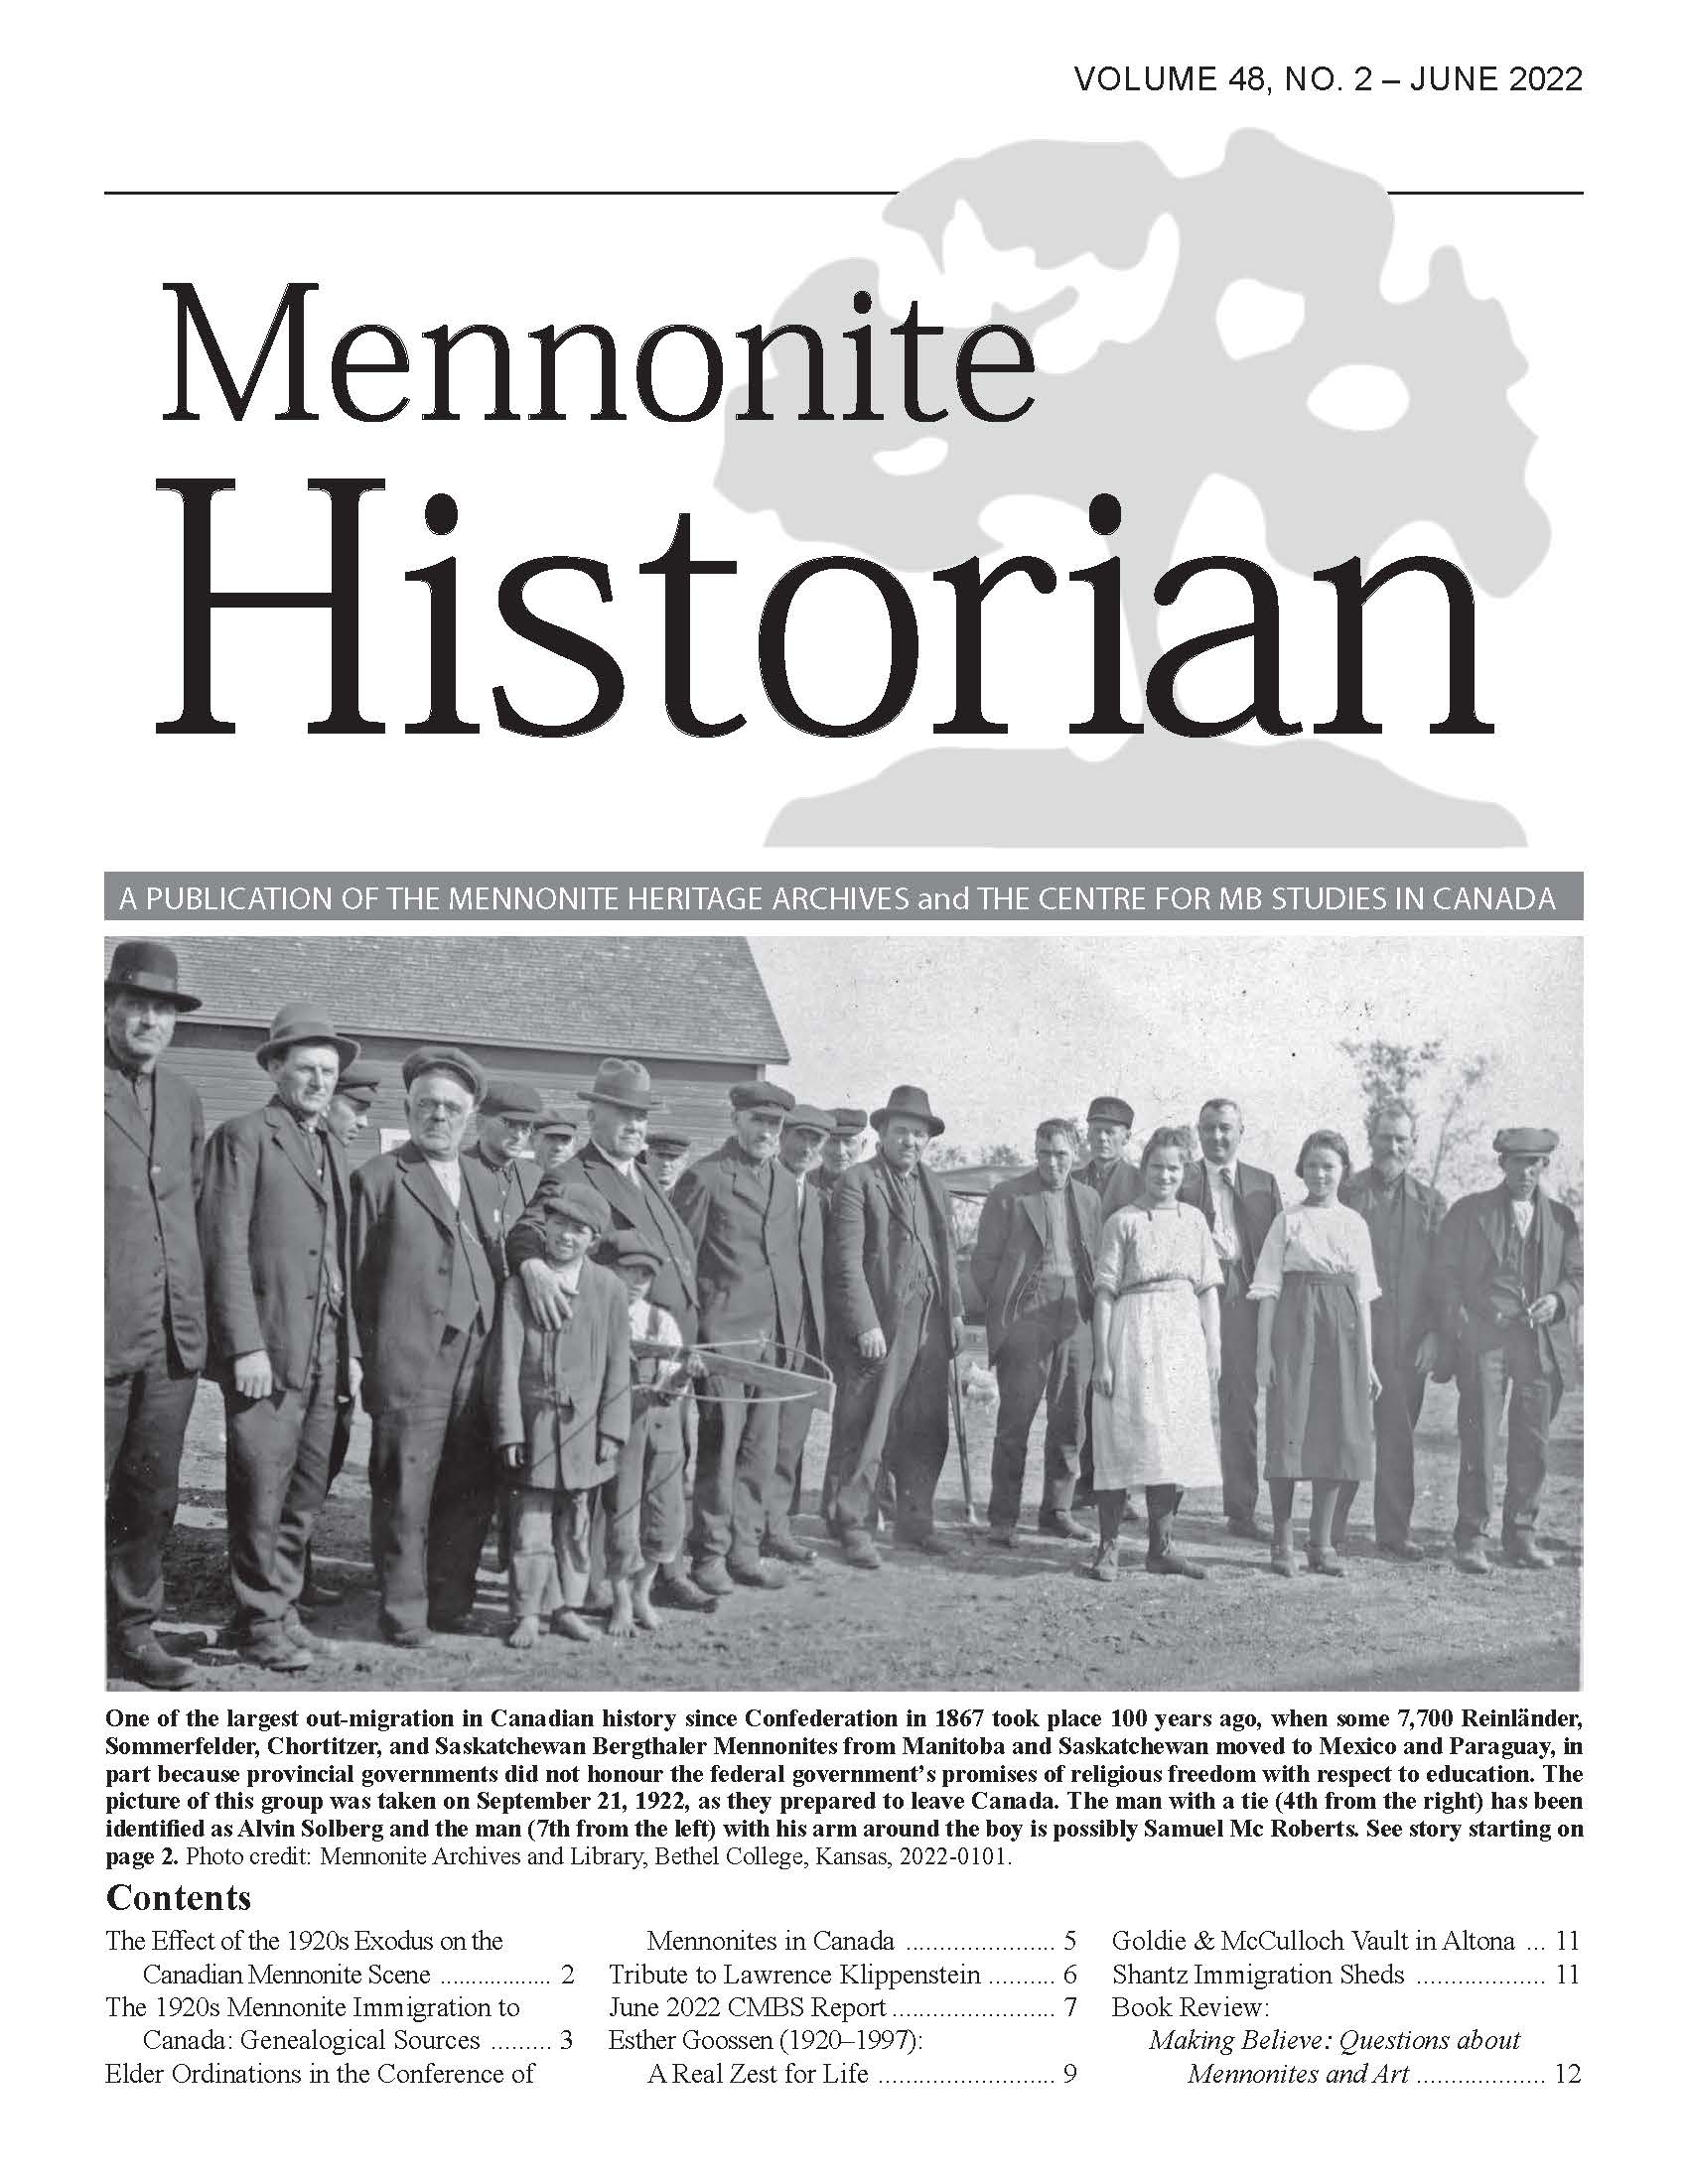 Mennonite Historian (June 2022)